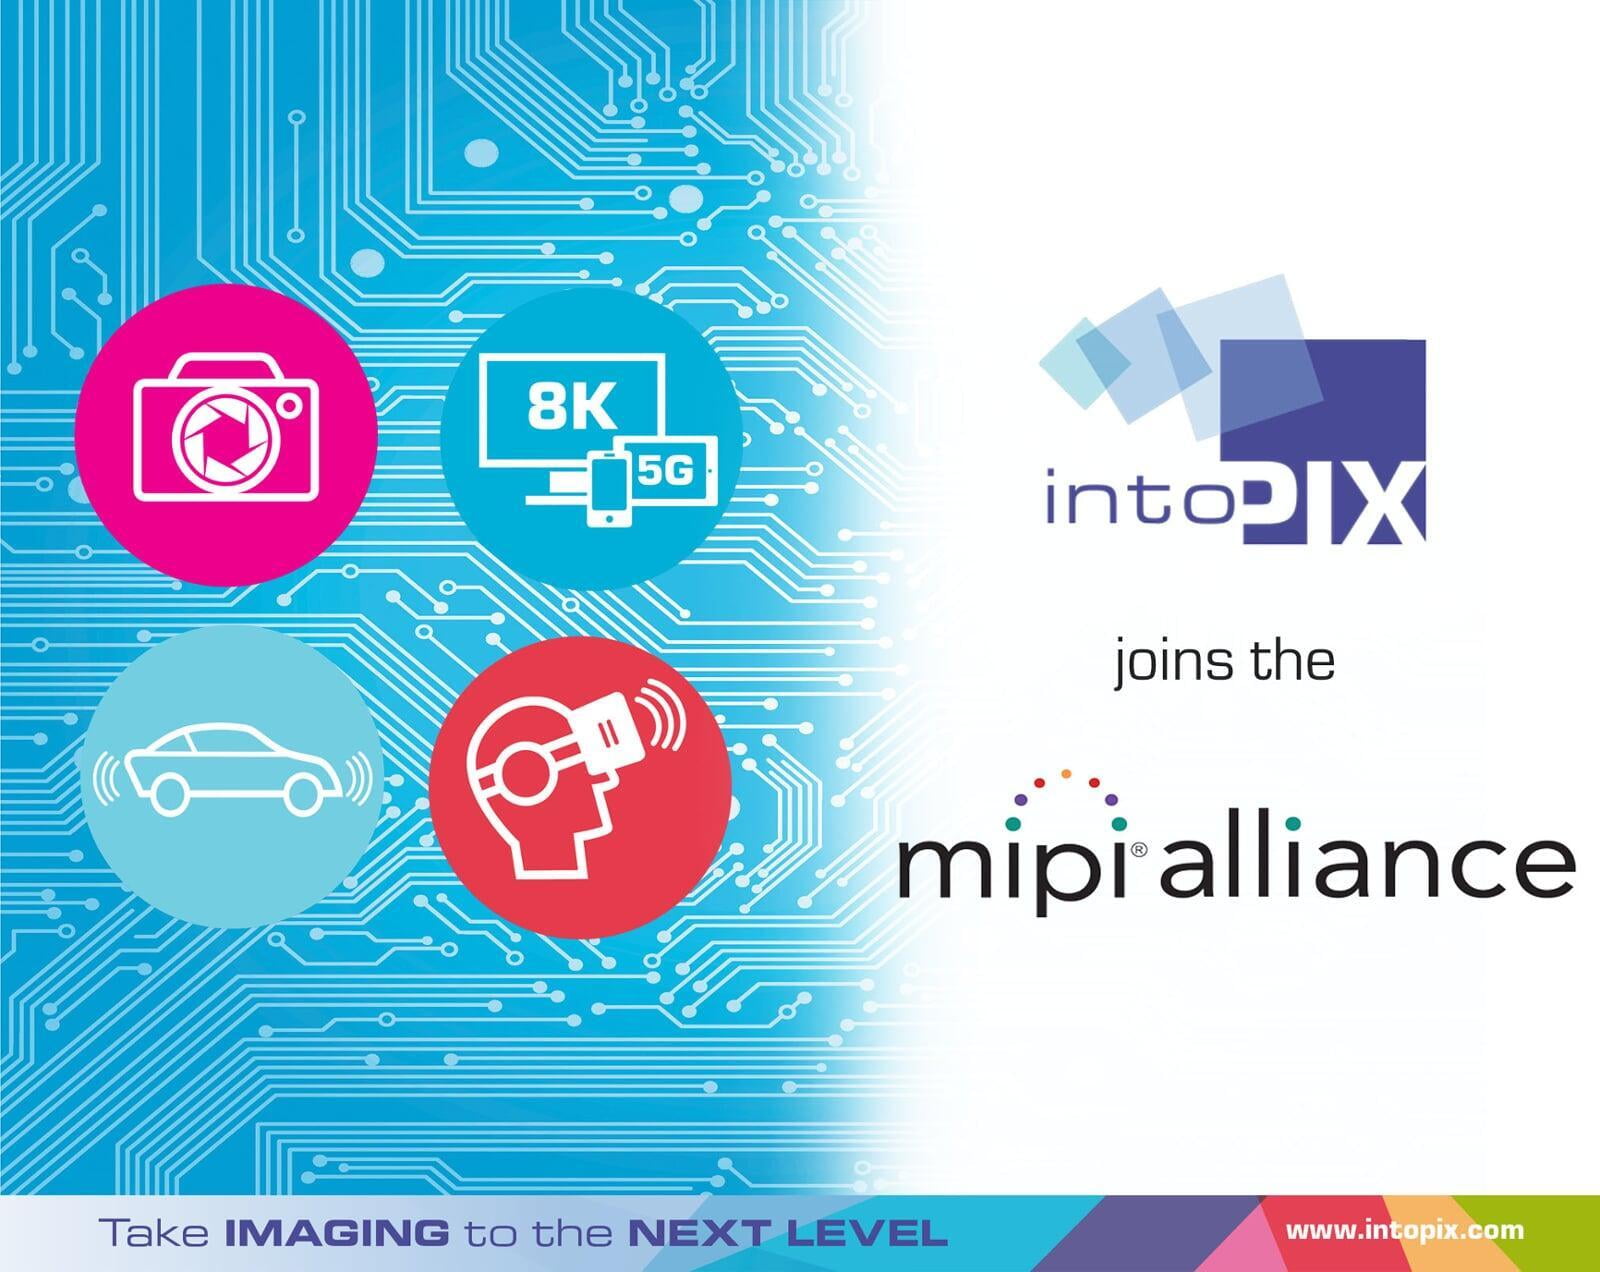 intoPIX joins the MIPI Alliance